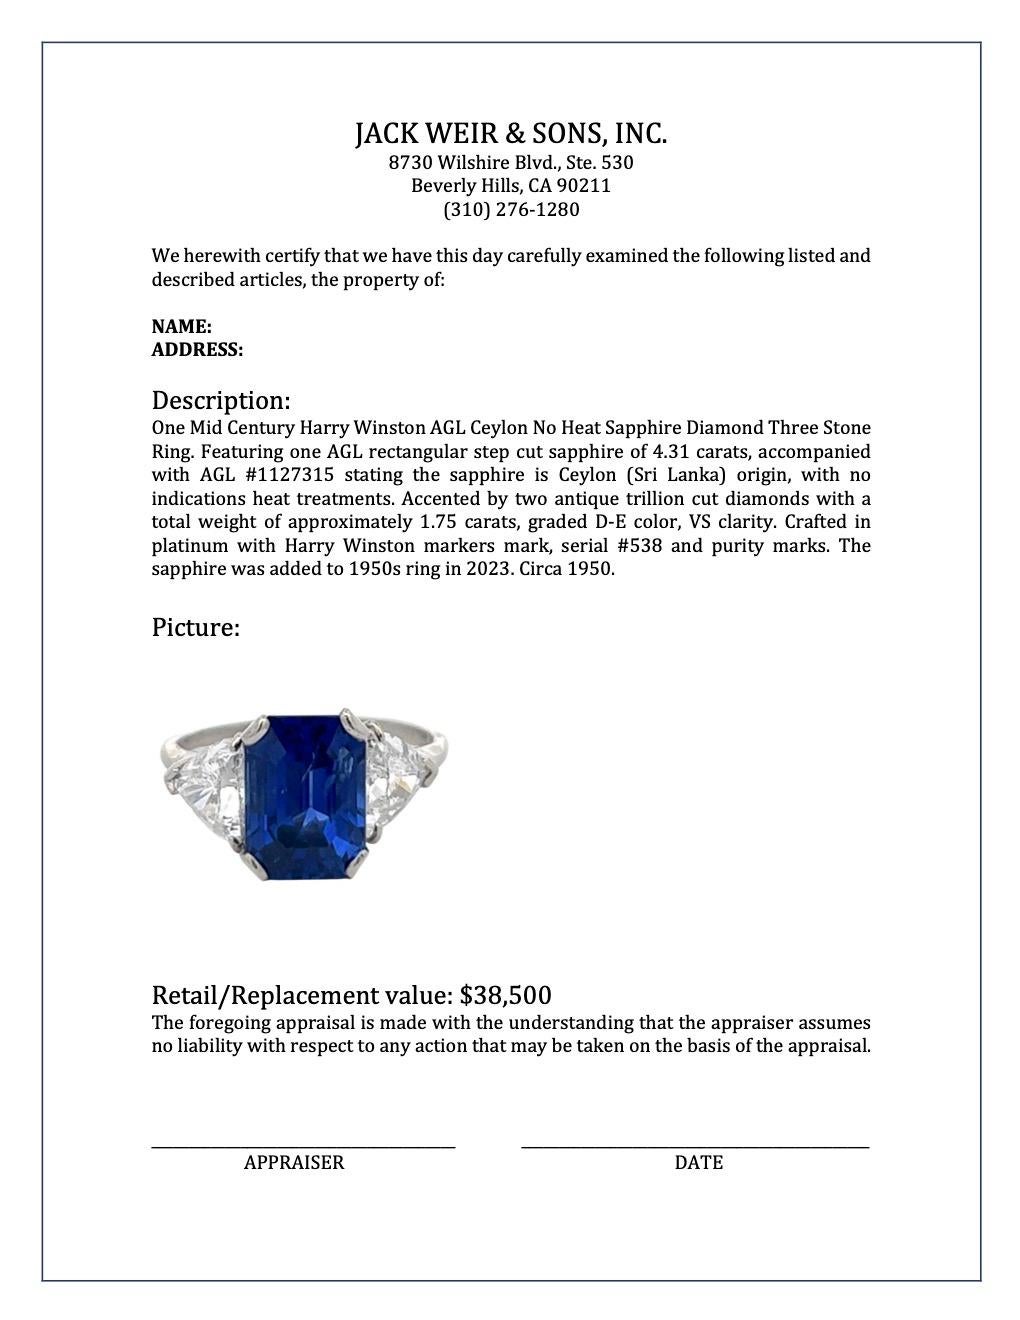 Women's or Men's Mid Century Harry Winston AGL Ceylon No Heat Sapphire Diamond Three Stone Ring